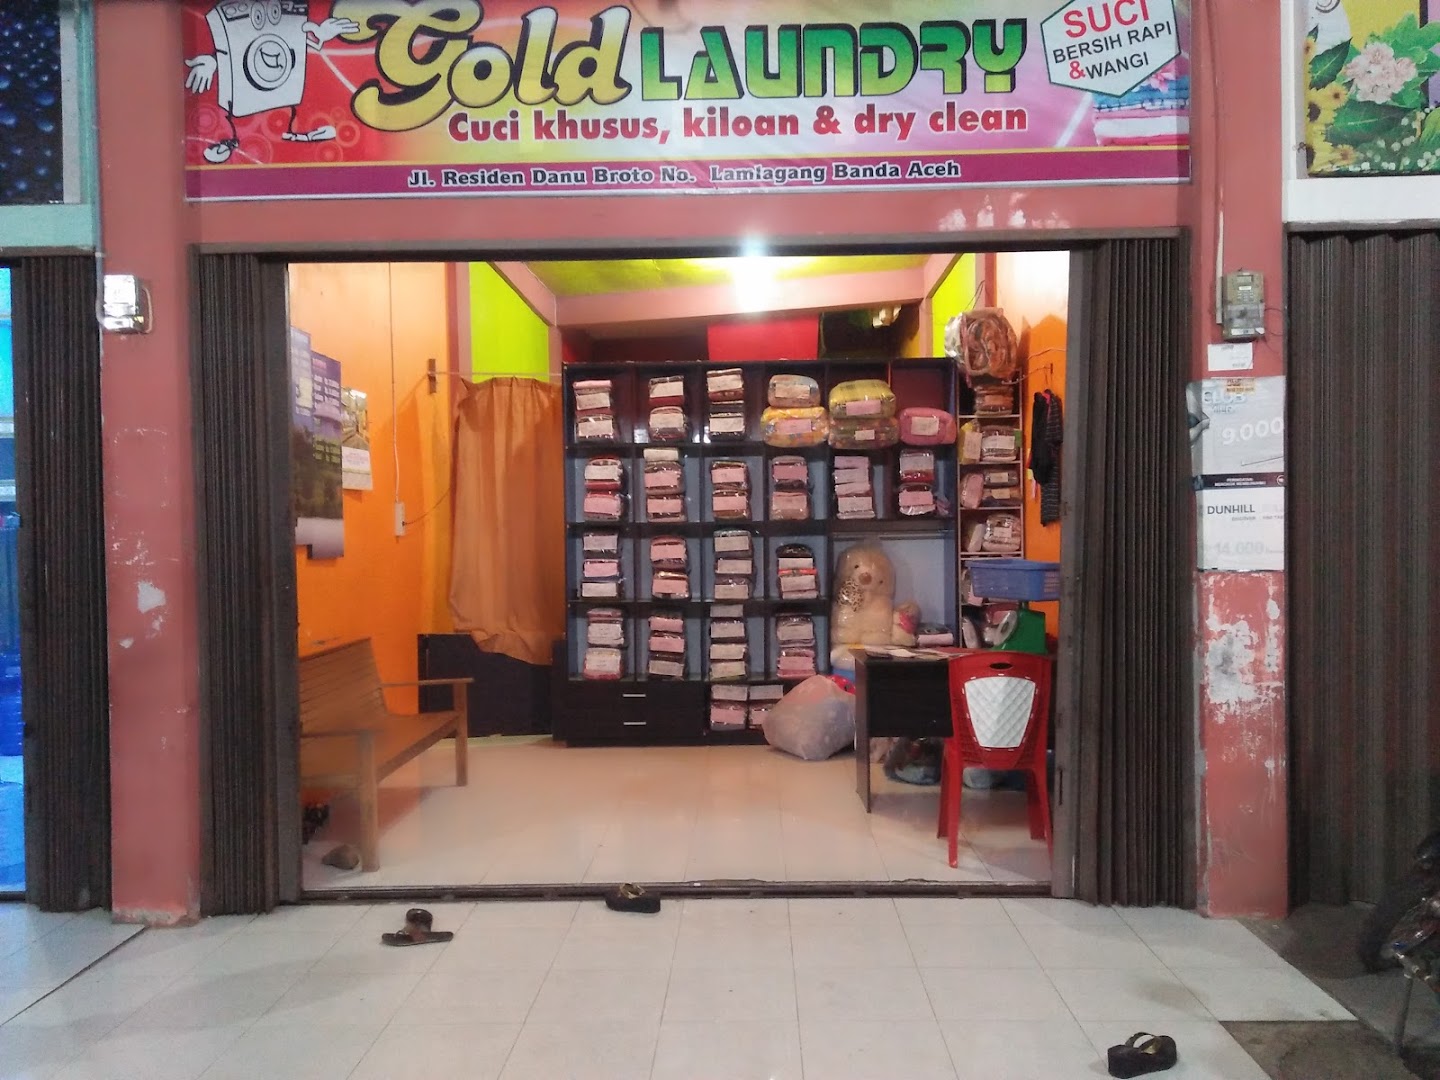 Gambar Gold Laundry